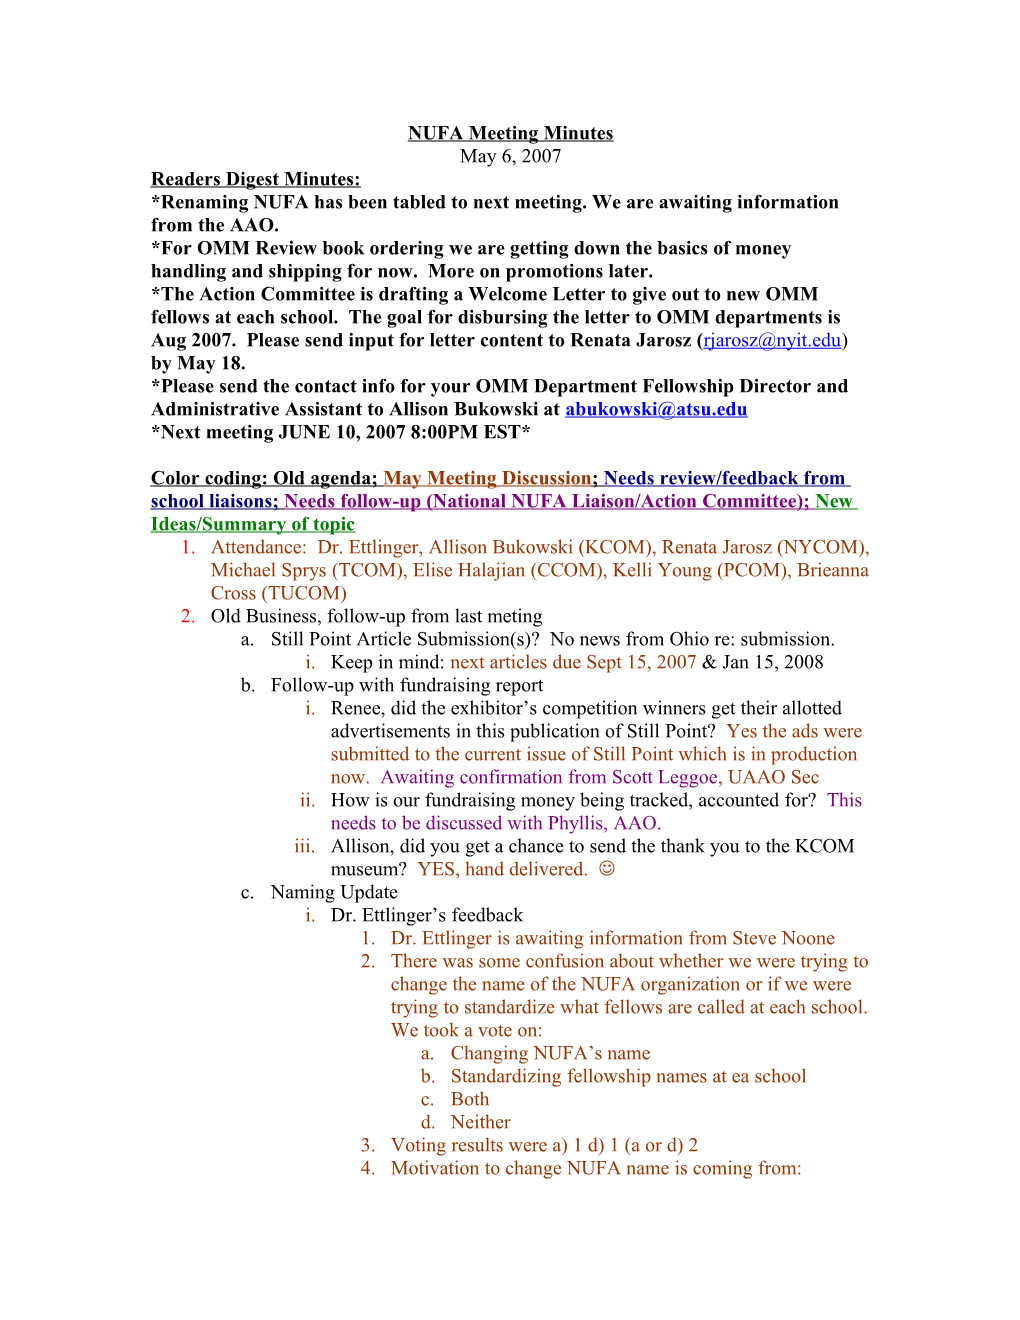 NUFA March Meeting Agenda